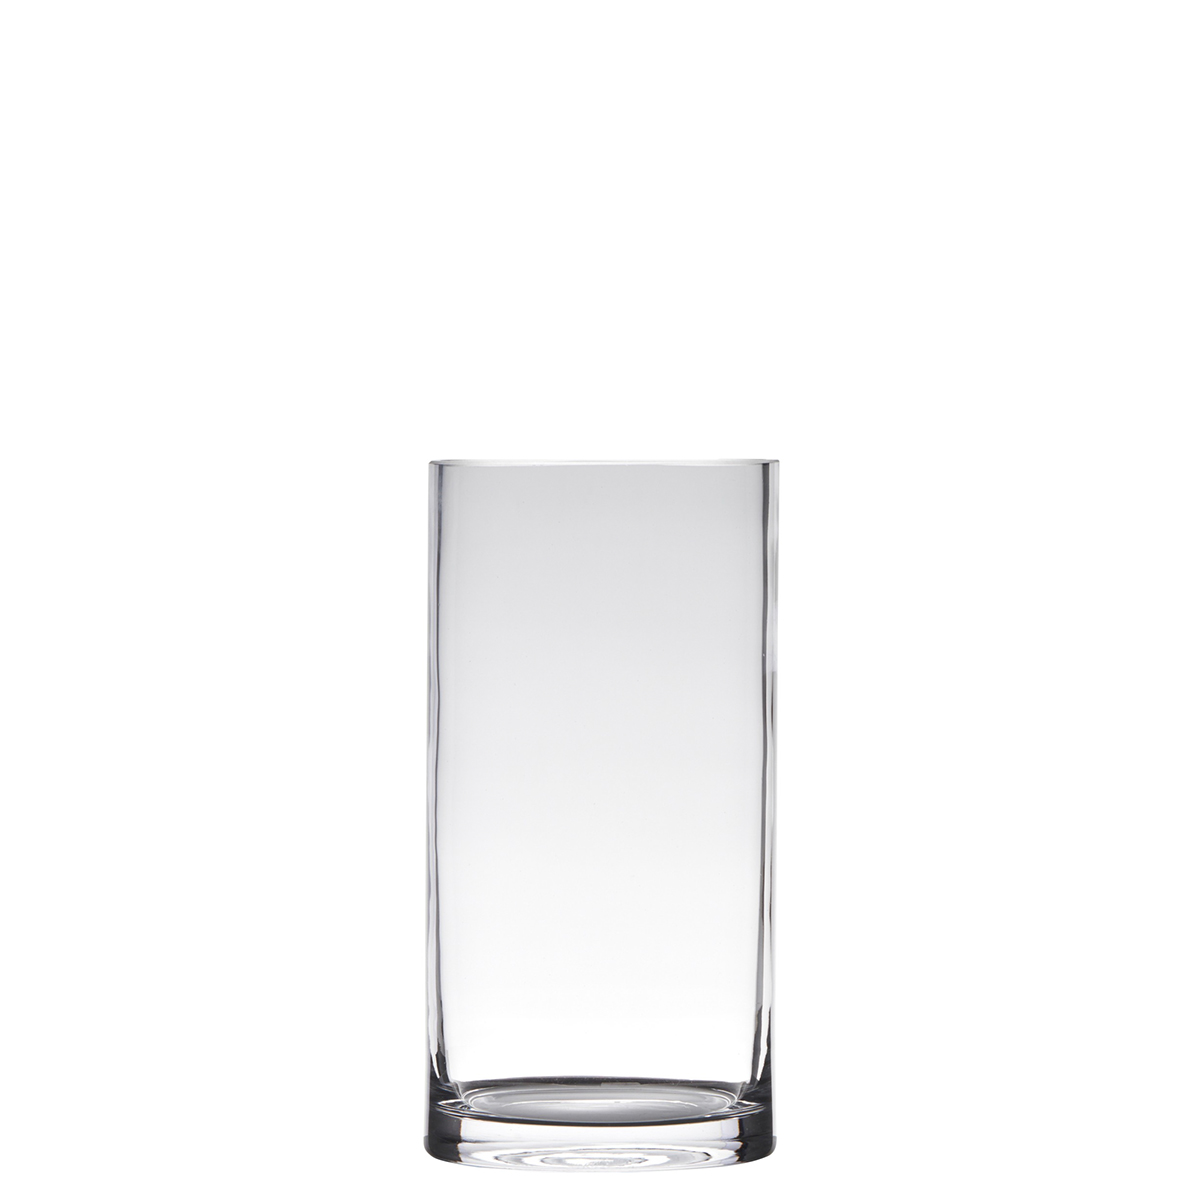 Hakbijl Glass Cilindervaas Glas Ø12xh25cm